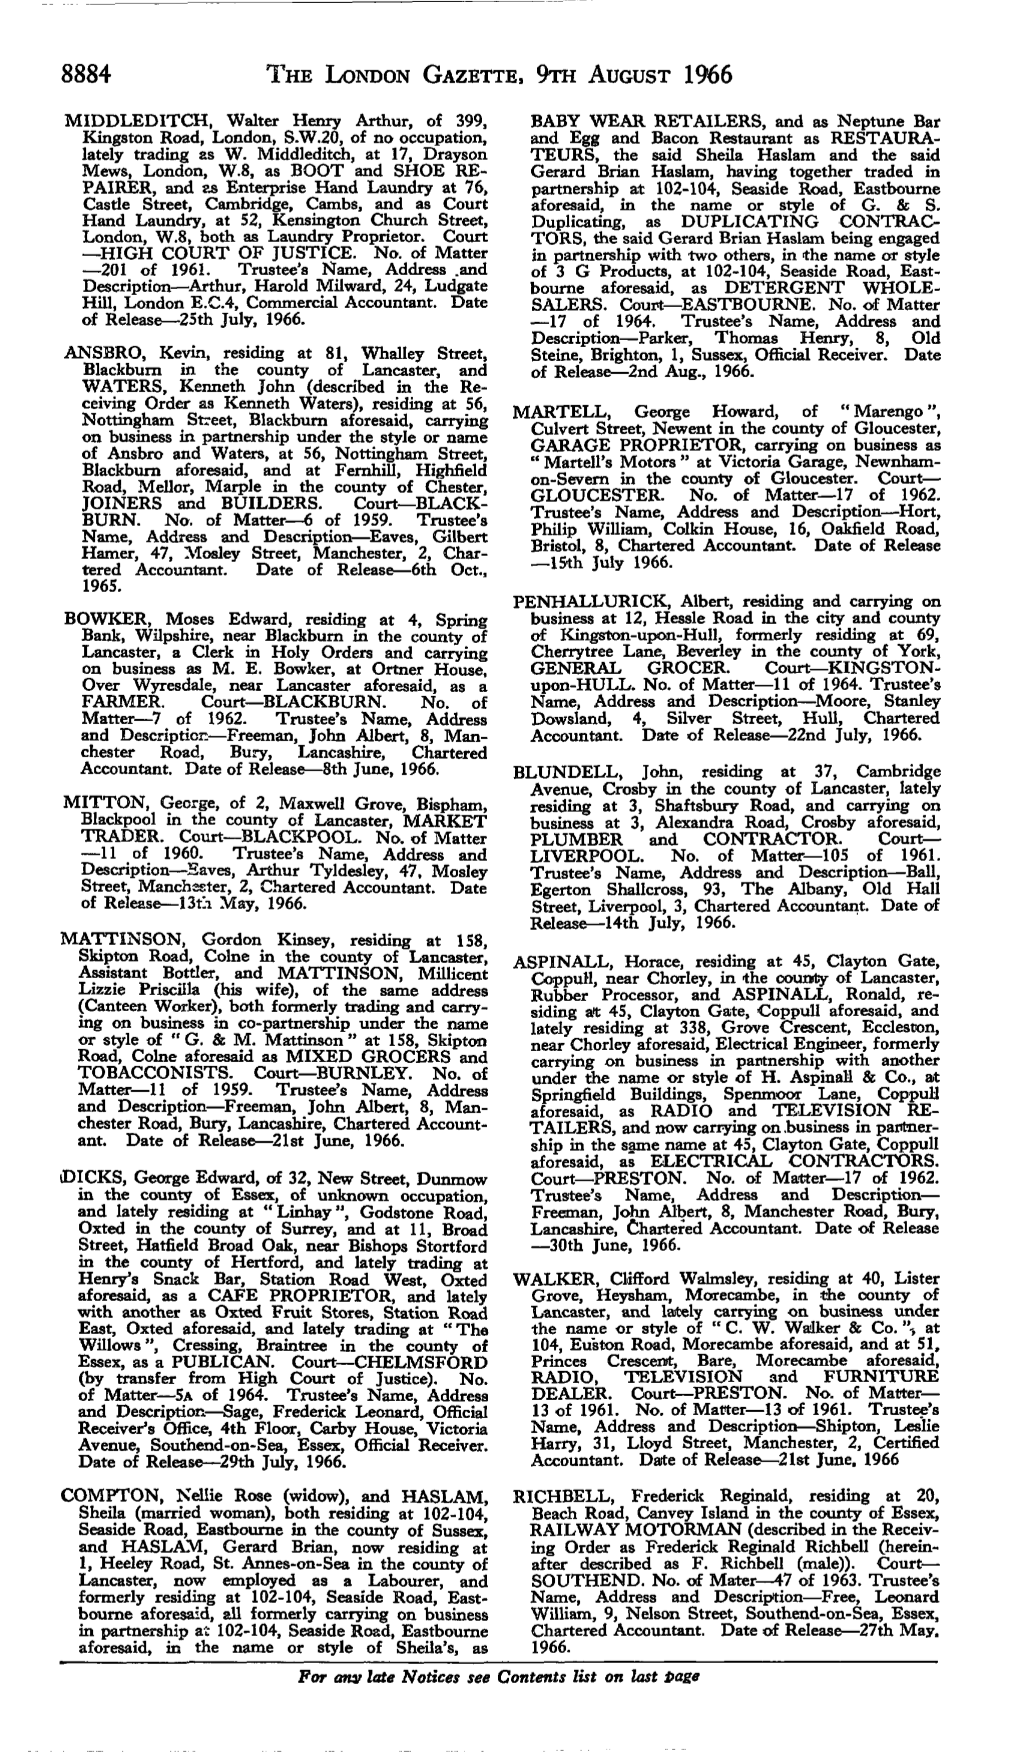 8884 the London Gazette, Qth August 1966